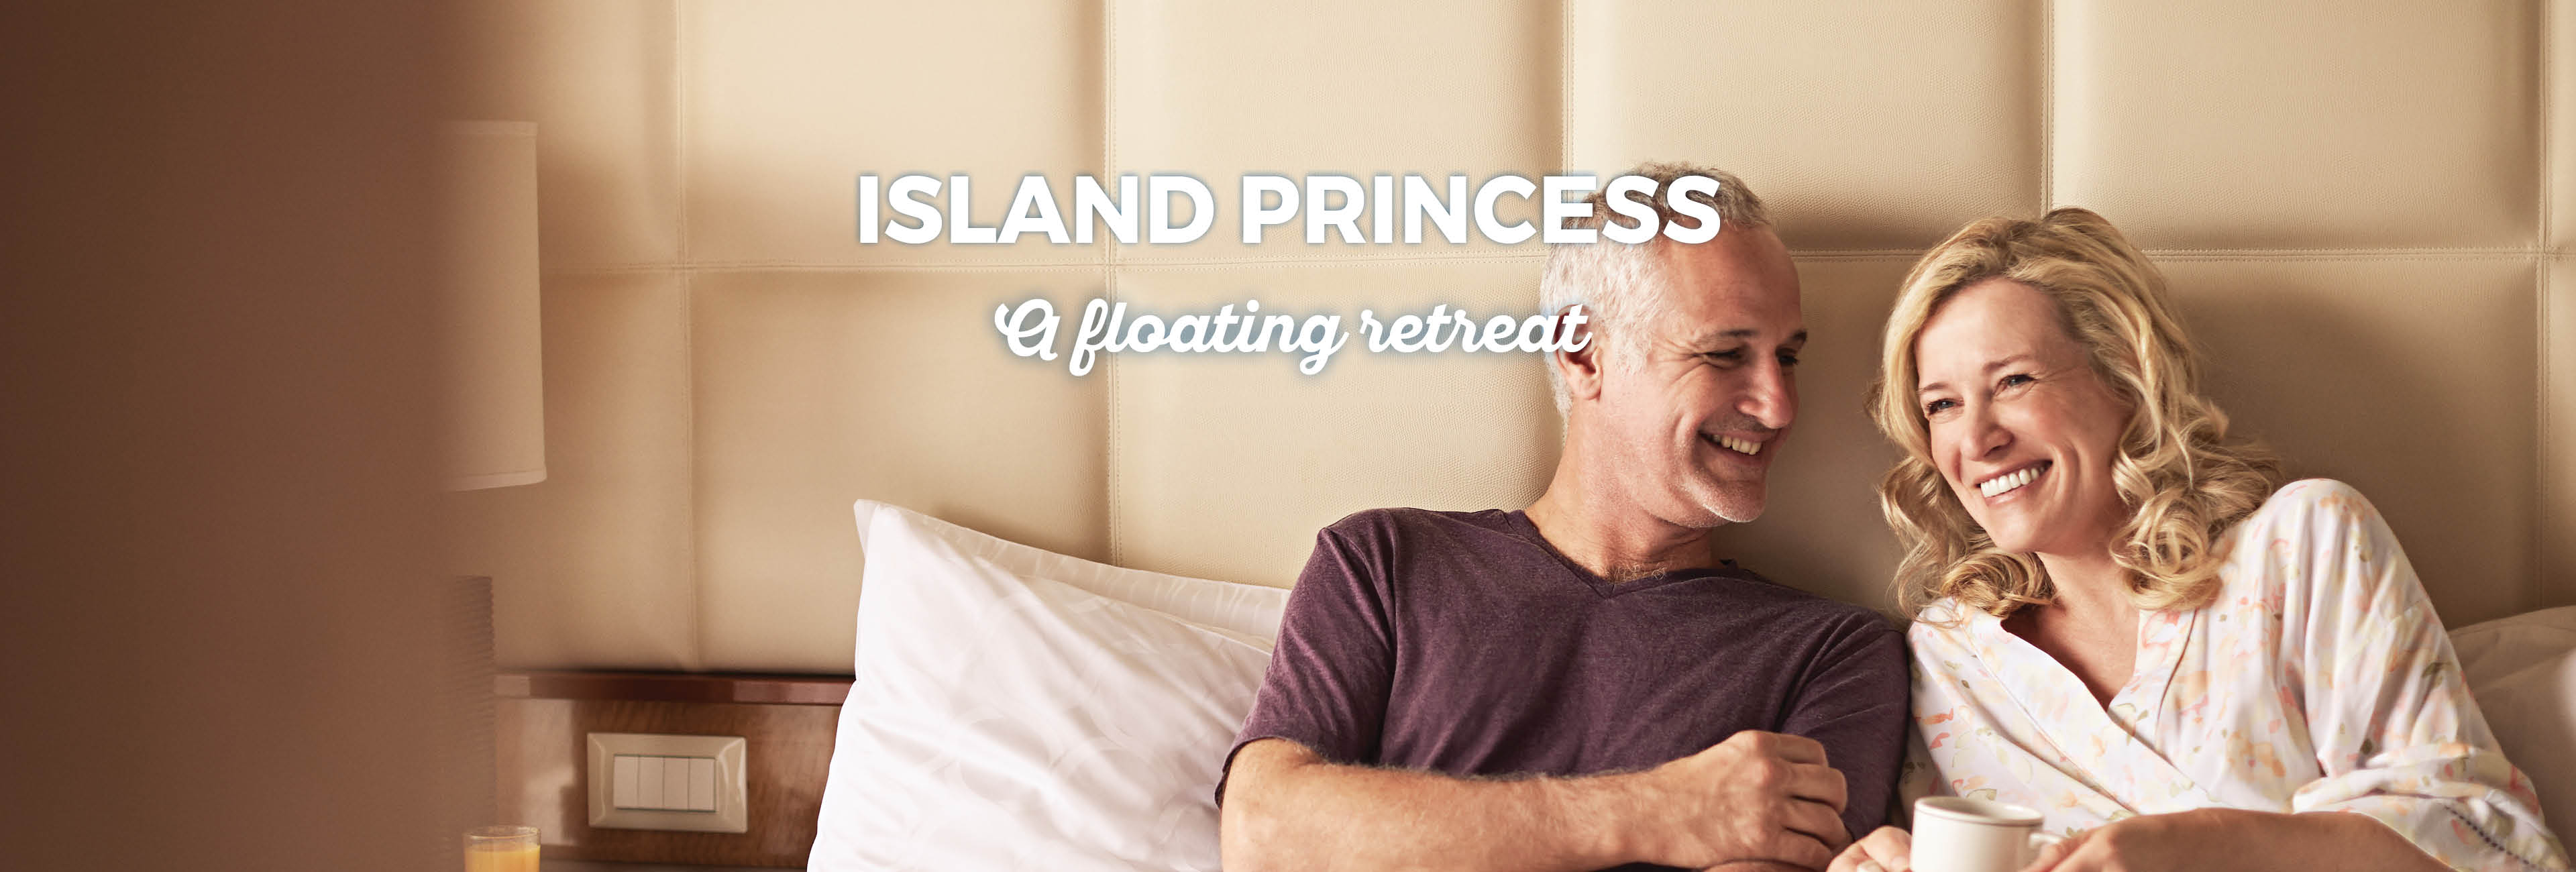 island-princess-1.jpg (1)